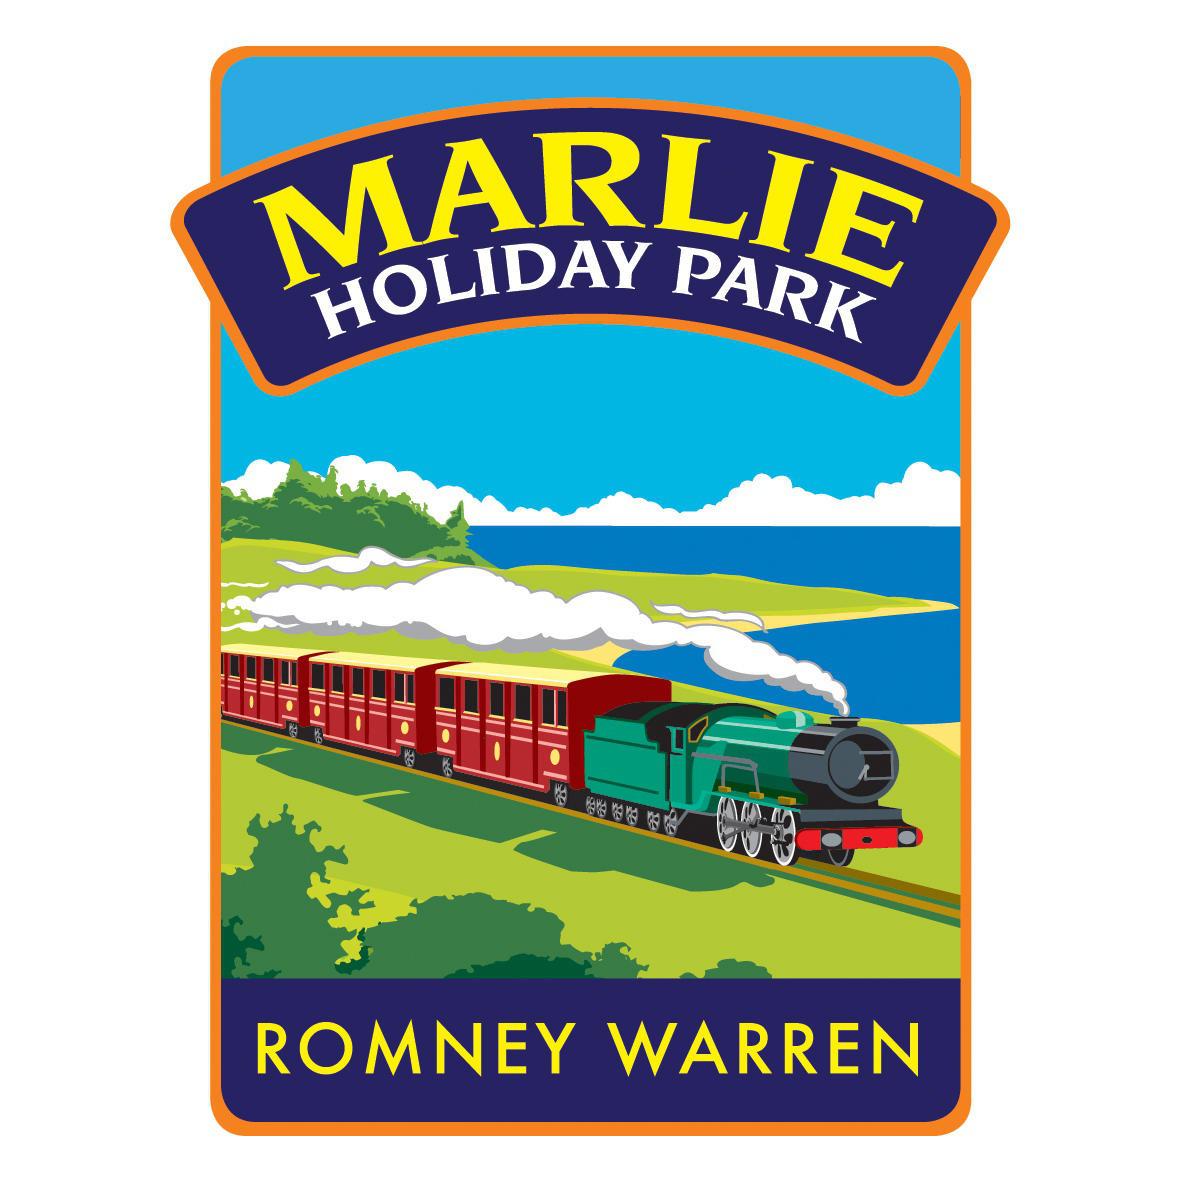 Marlie Holiday Park New Romney 01797 330155